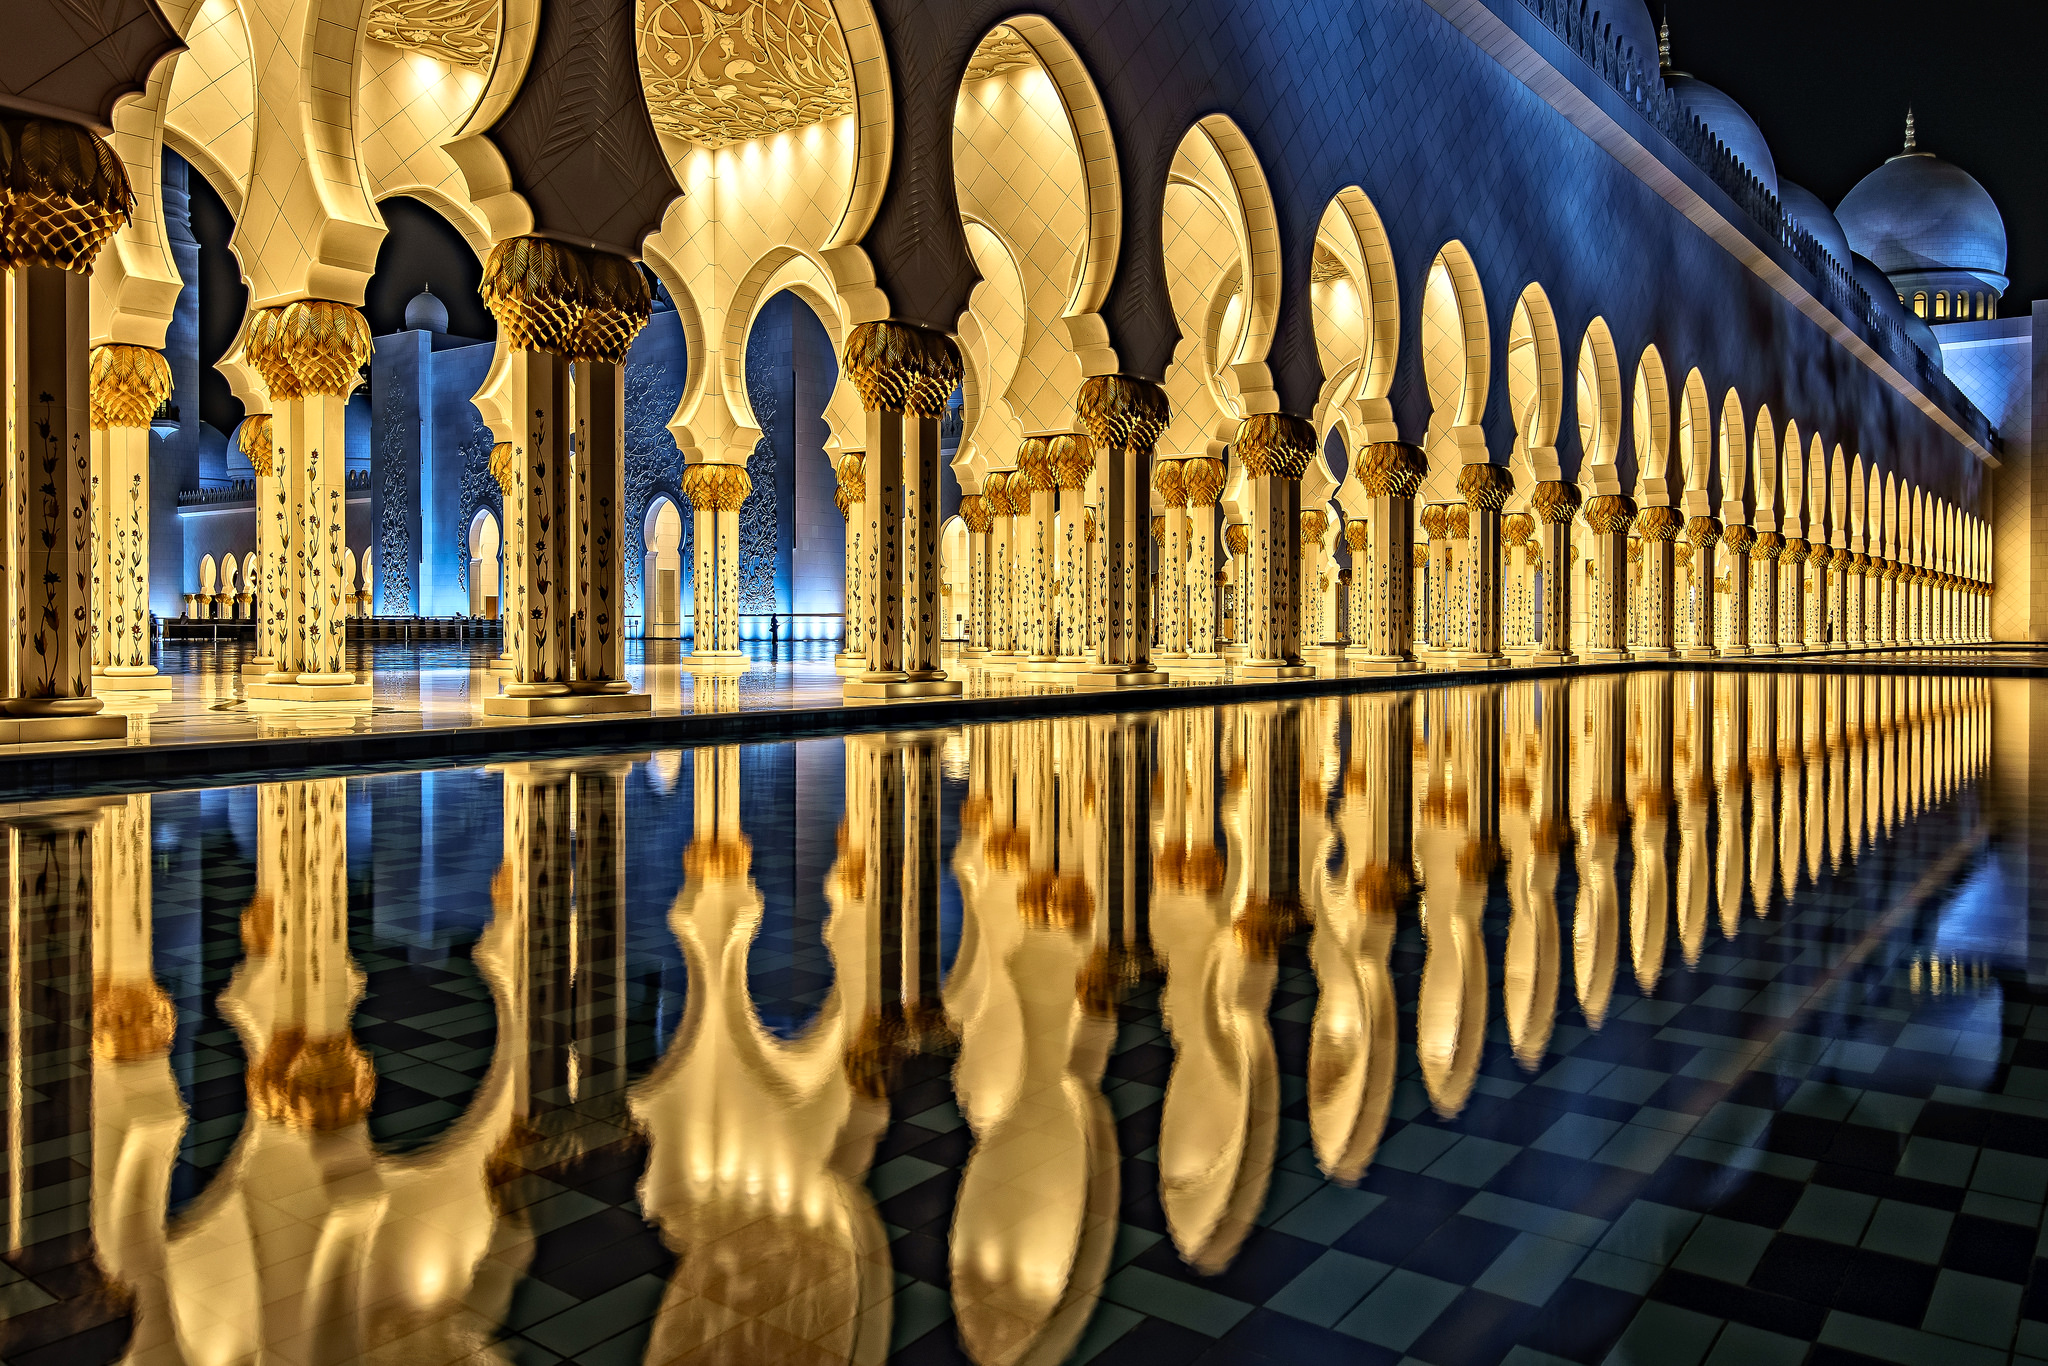 sheikh wallpaper,reflection,architecture,baluster,world,tourist attraction